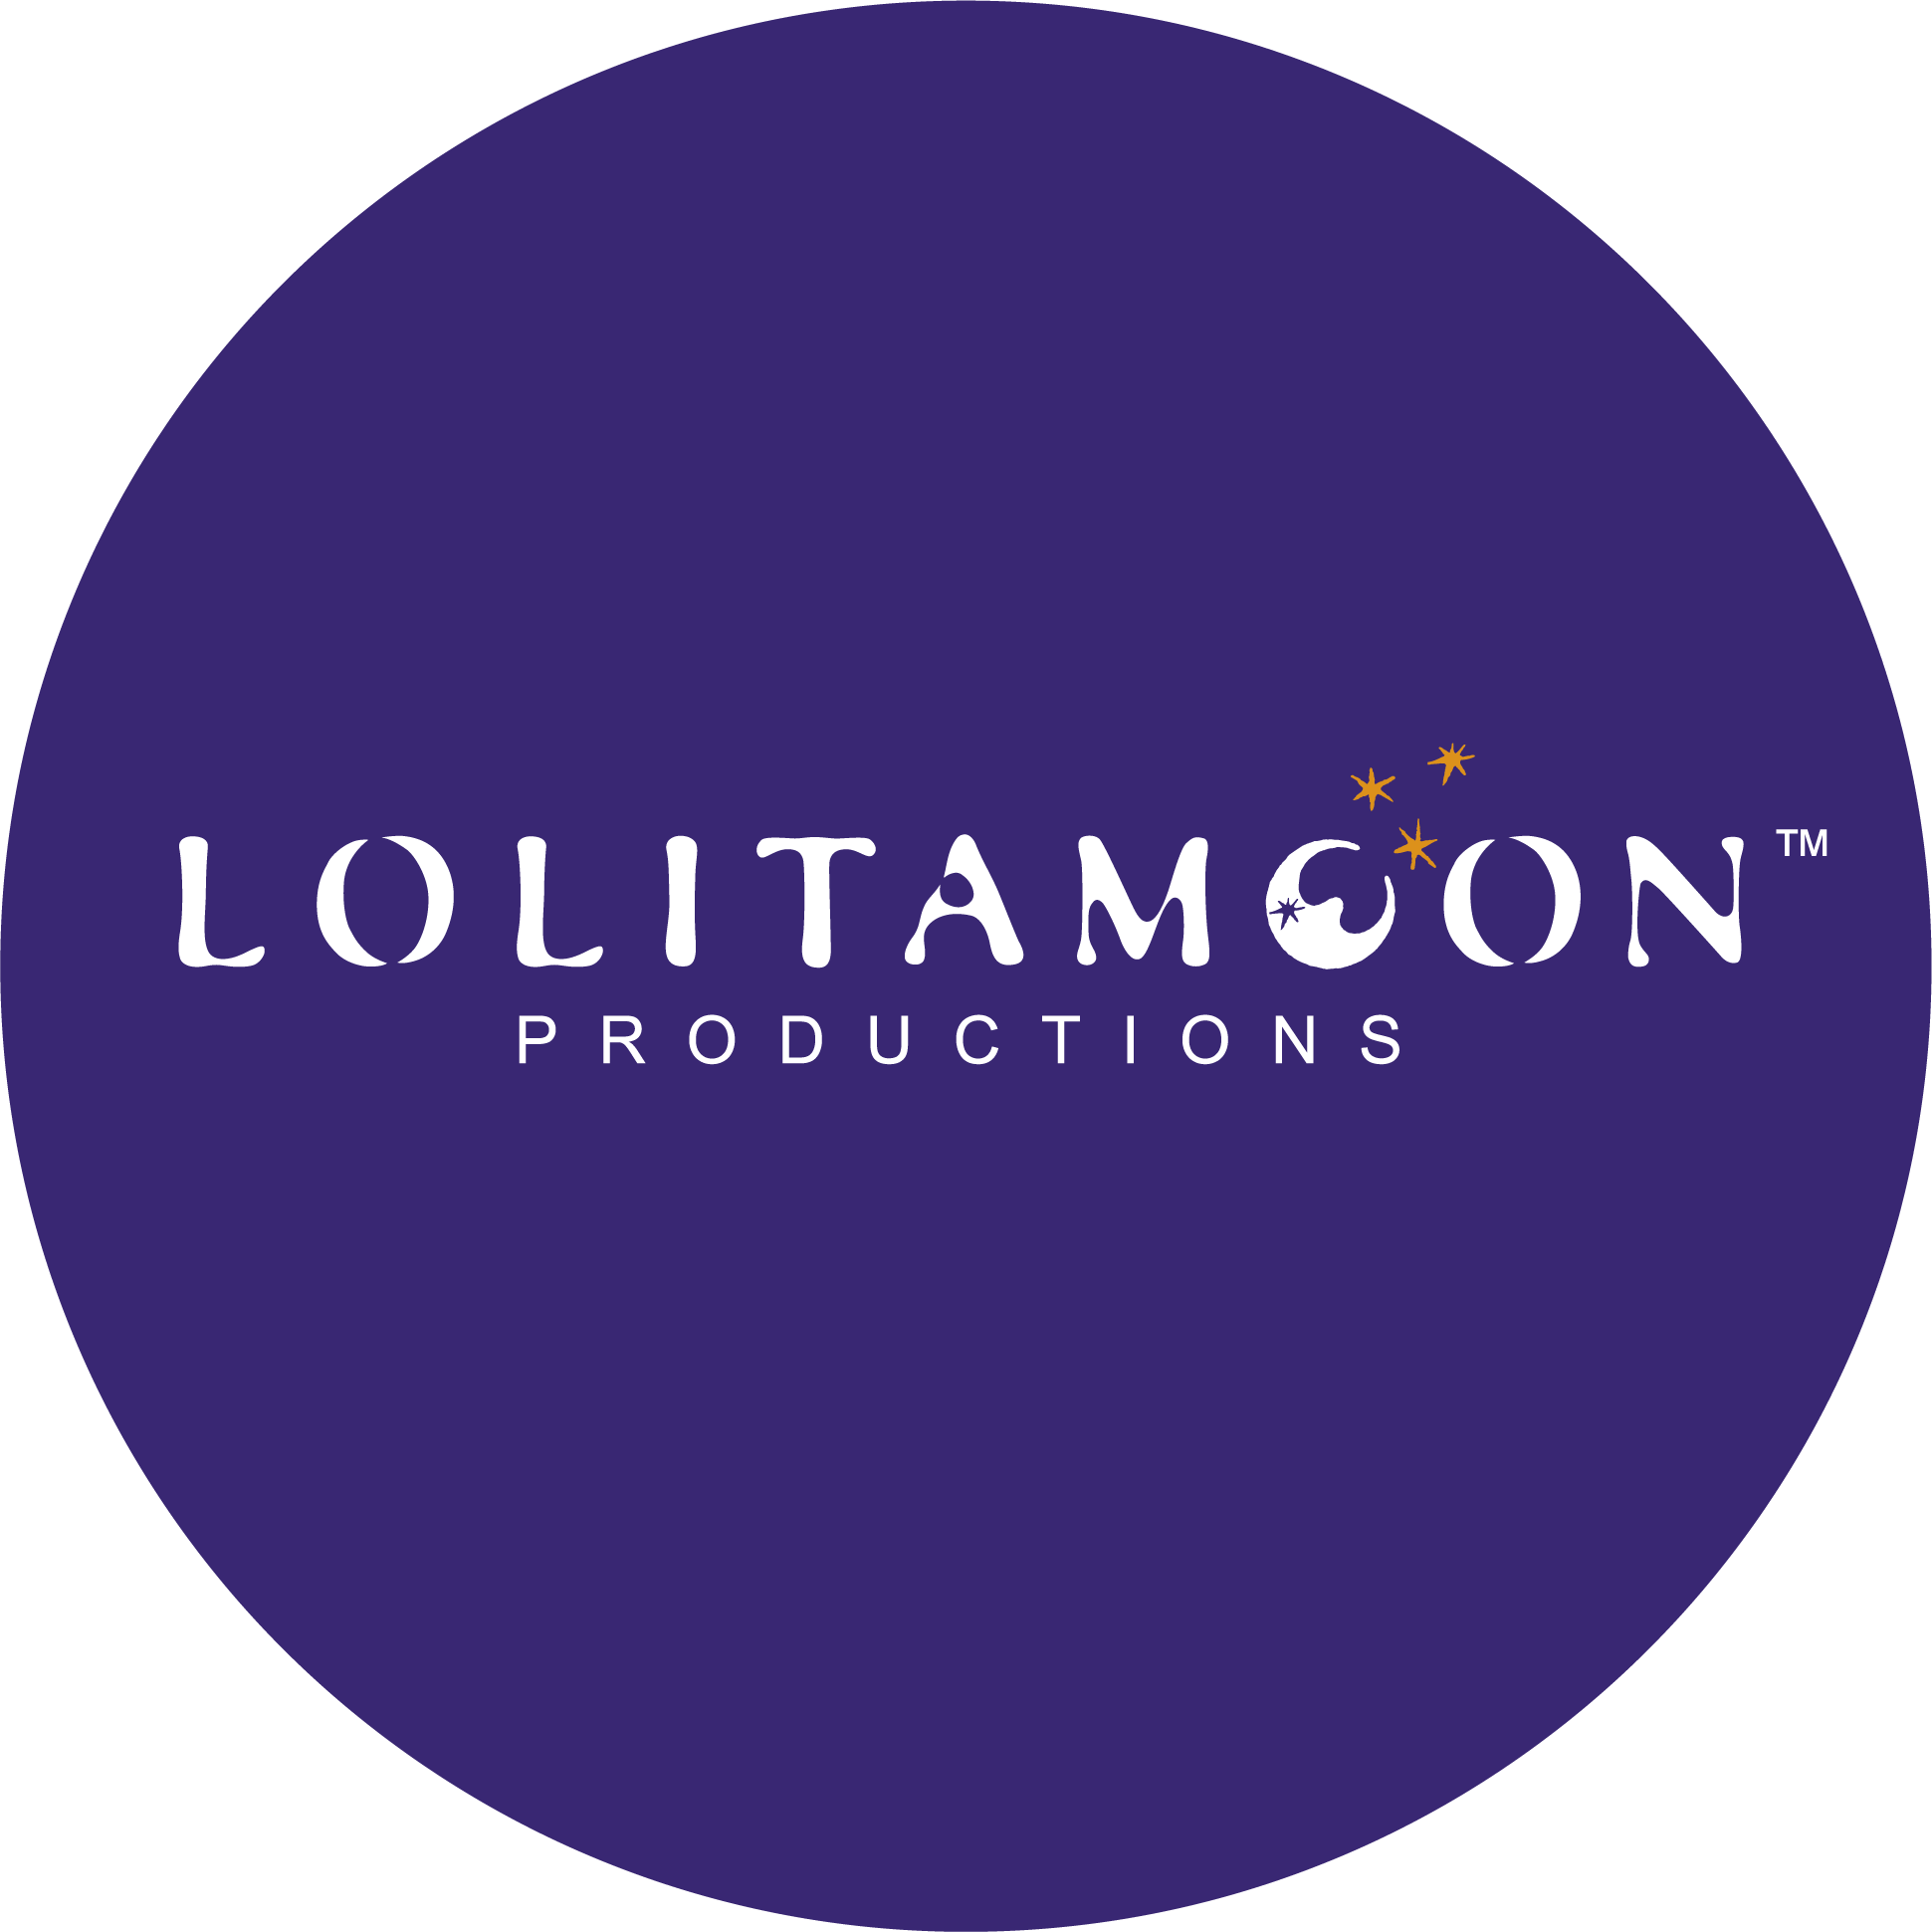 LolitaMoon Productions